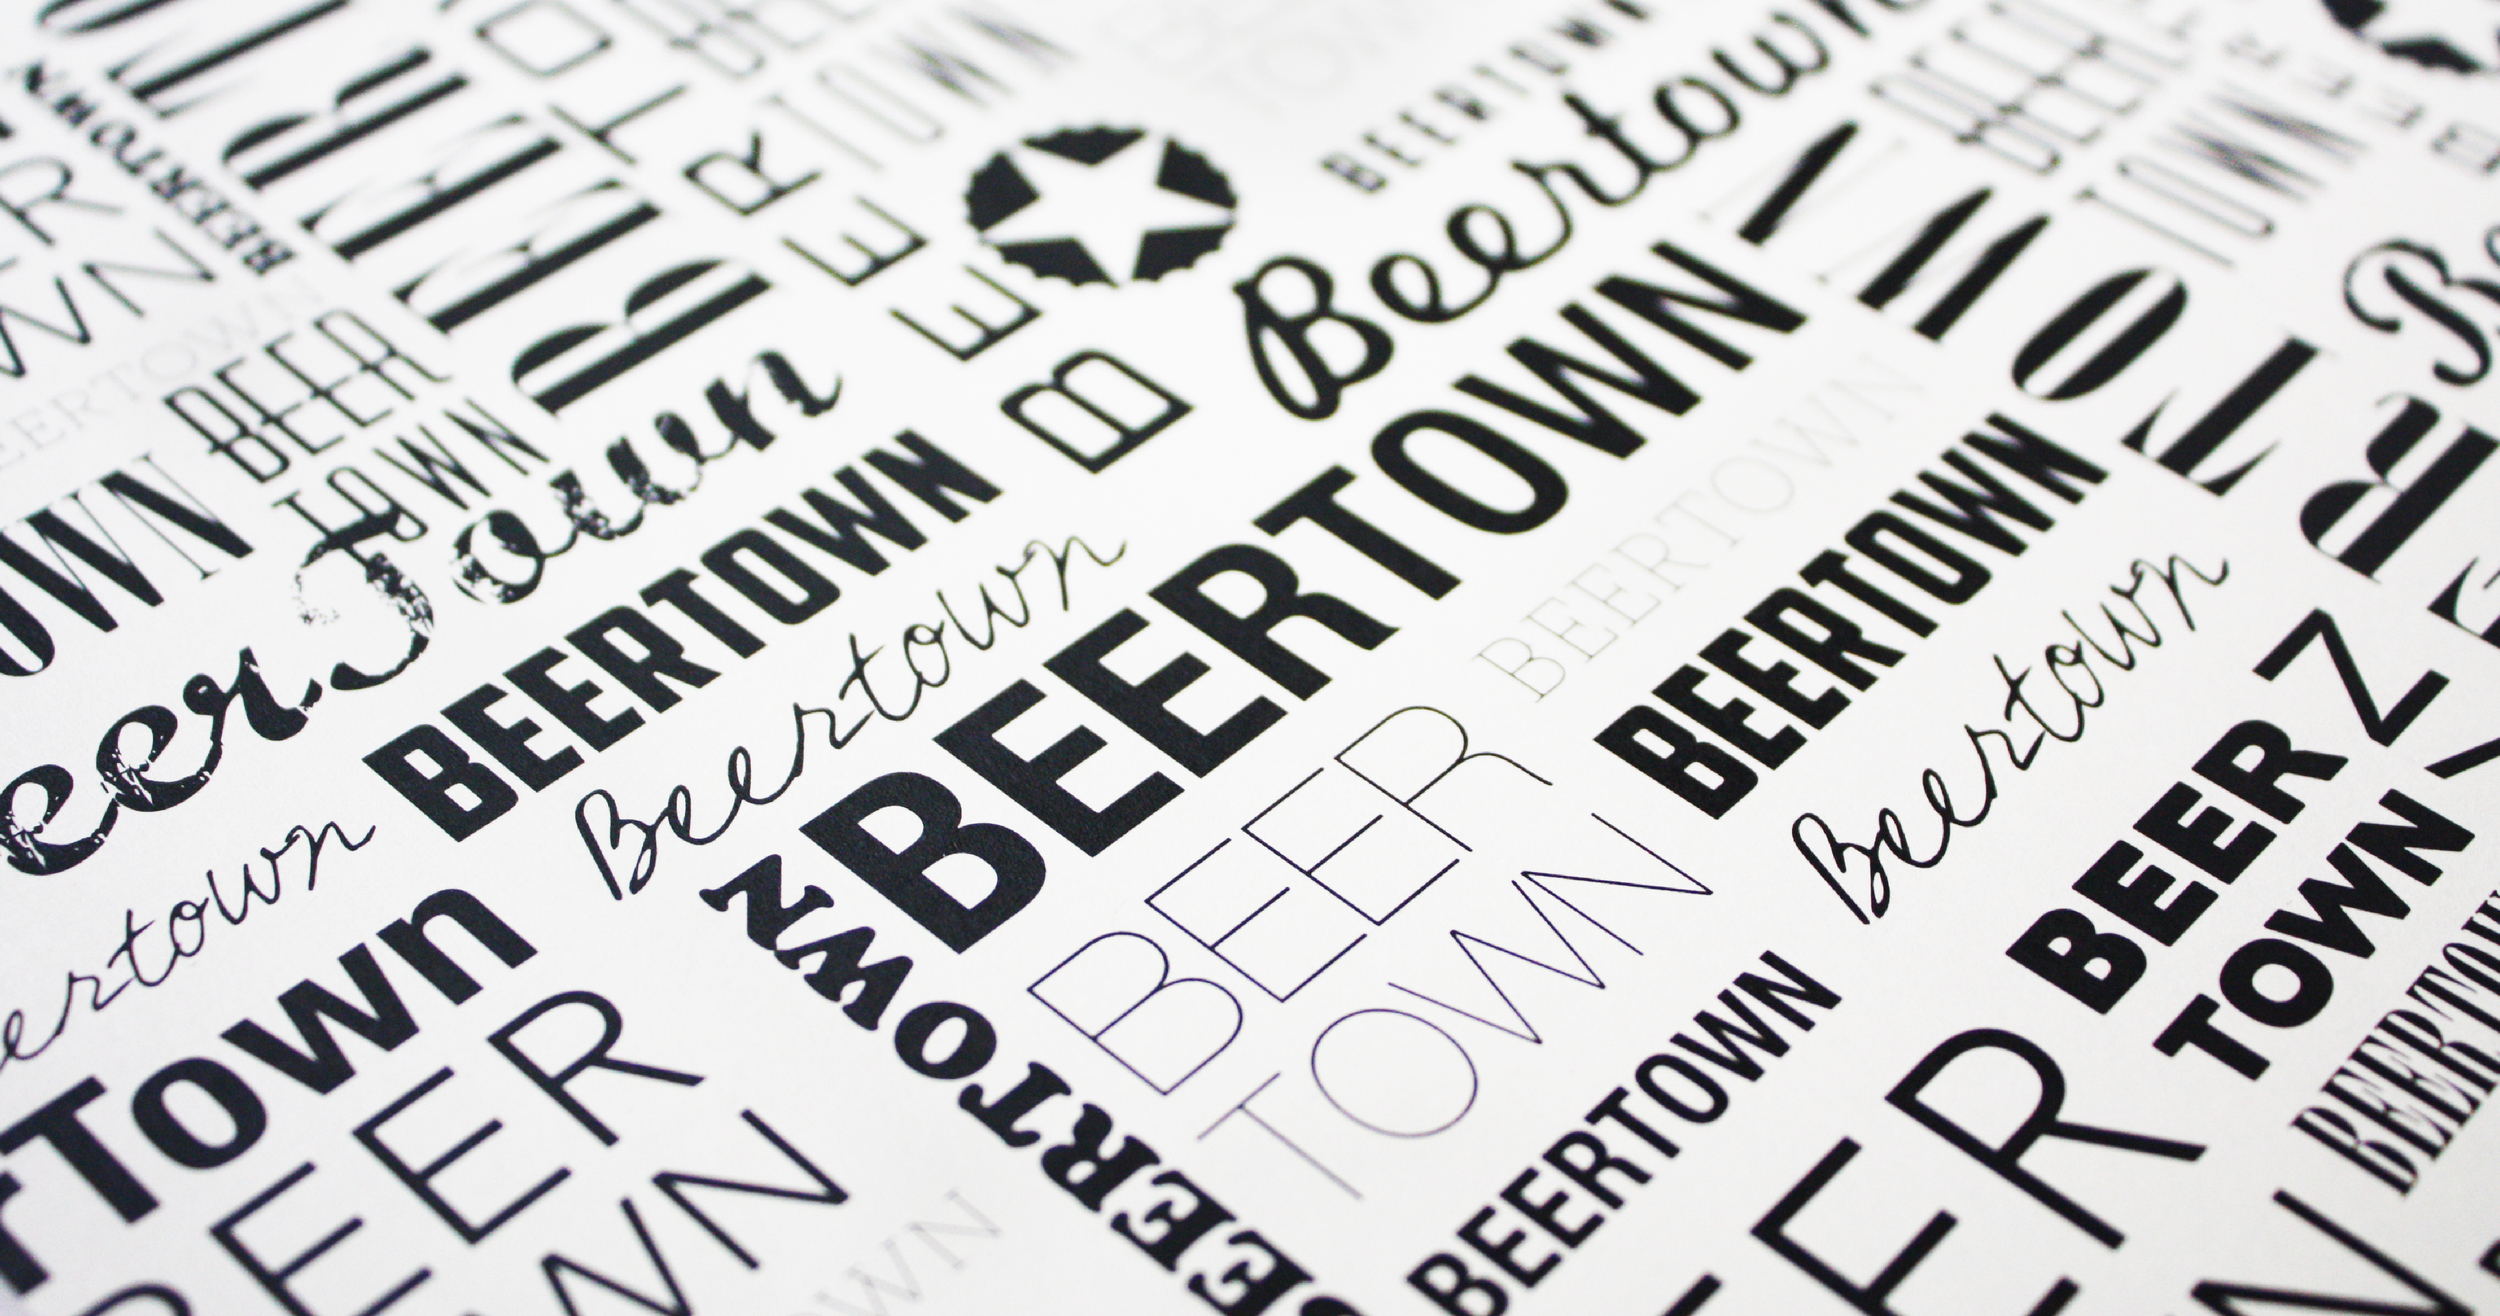 Beertown-01.jpg